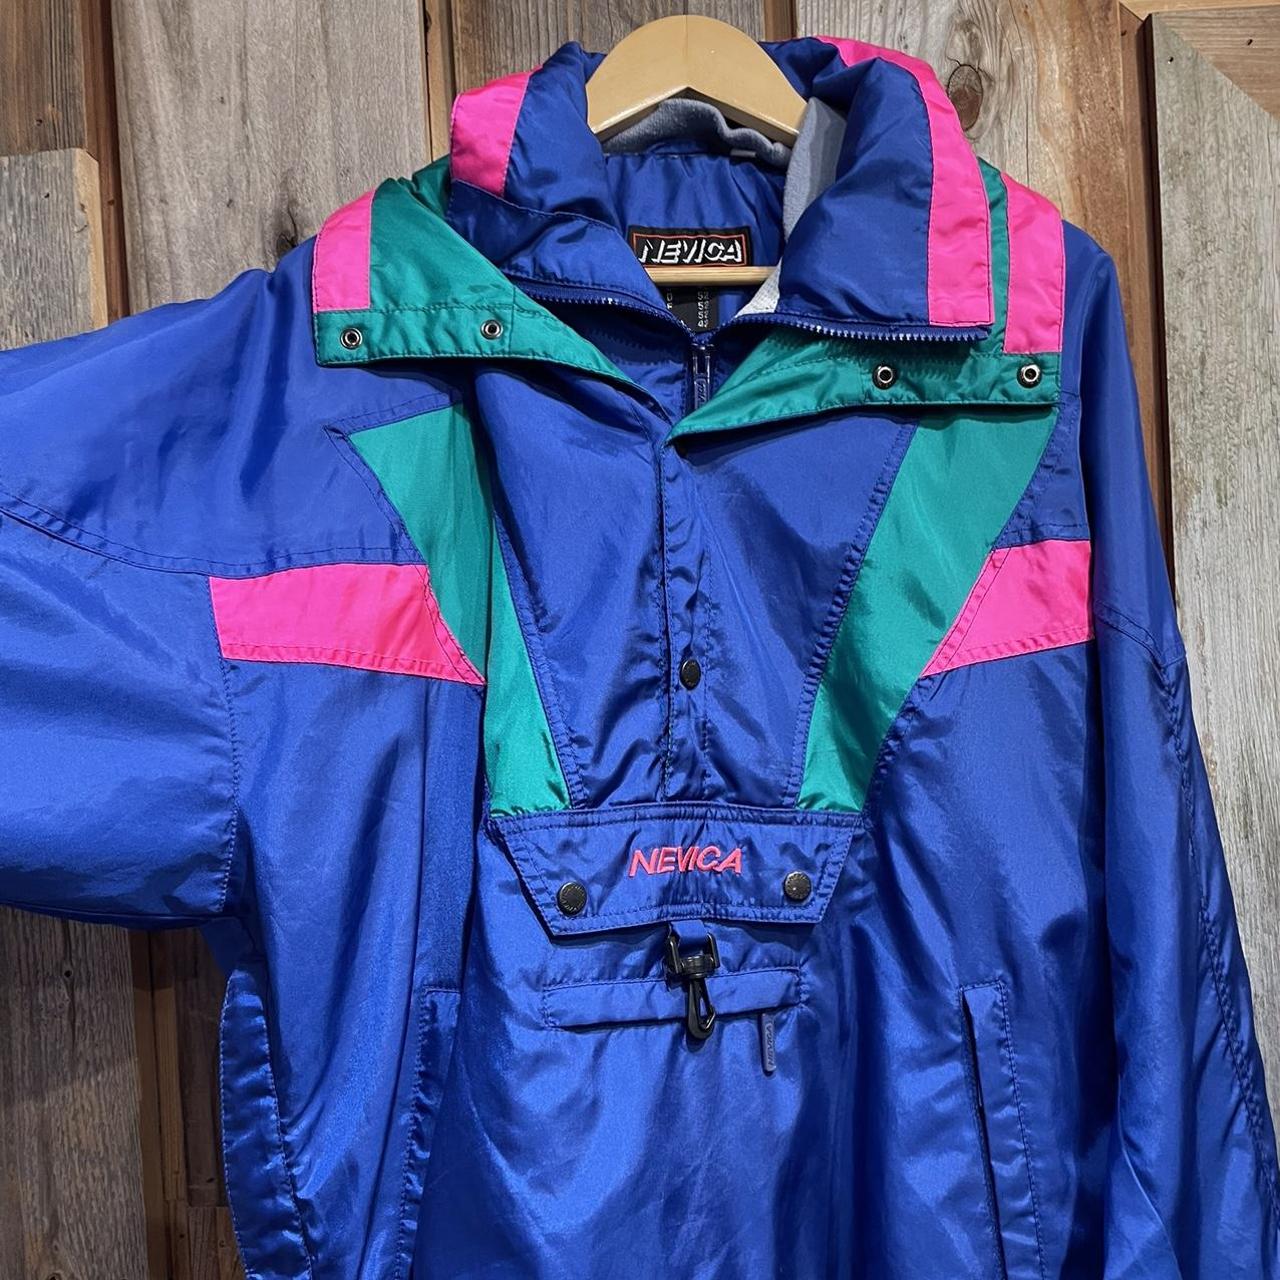 Vintage 1980s Nevica Ski Jacket with a Balaclava... - Depop